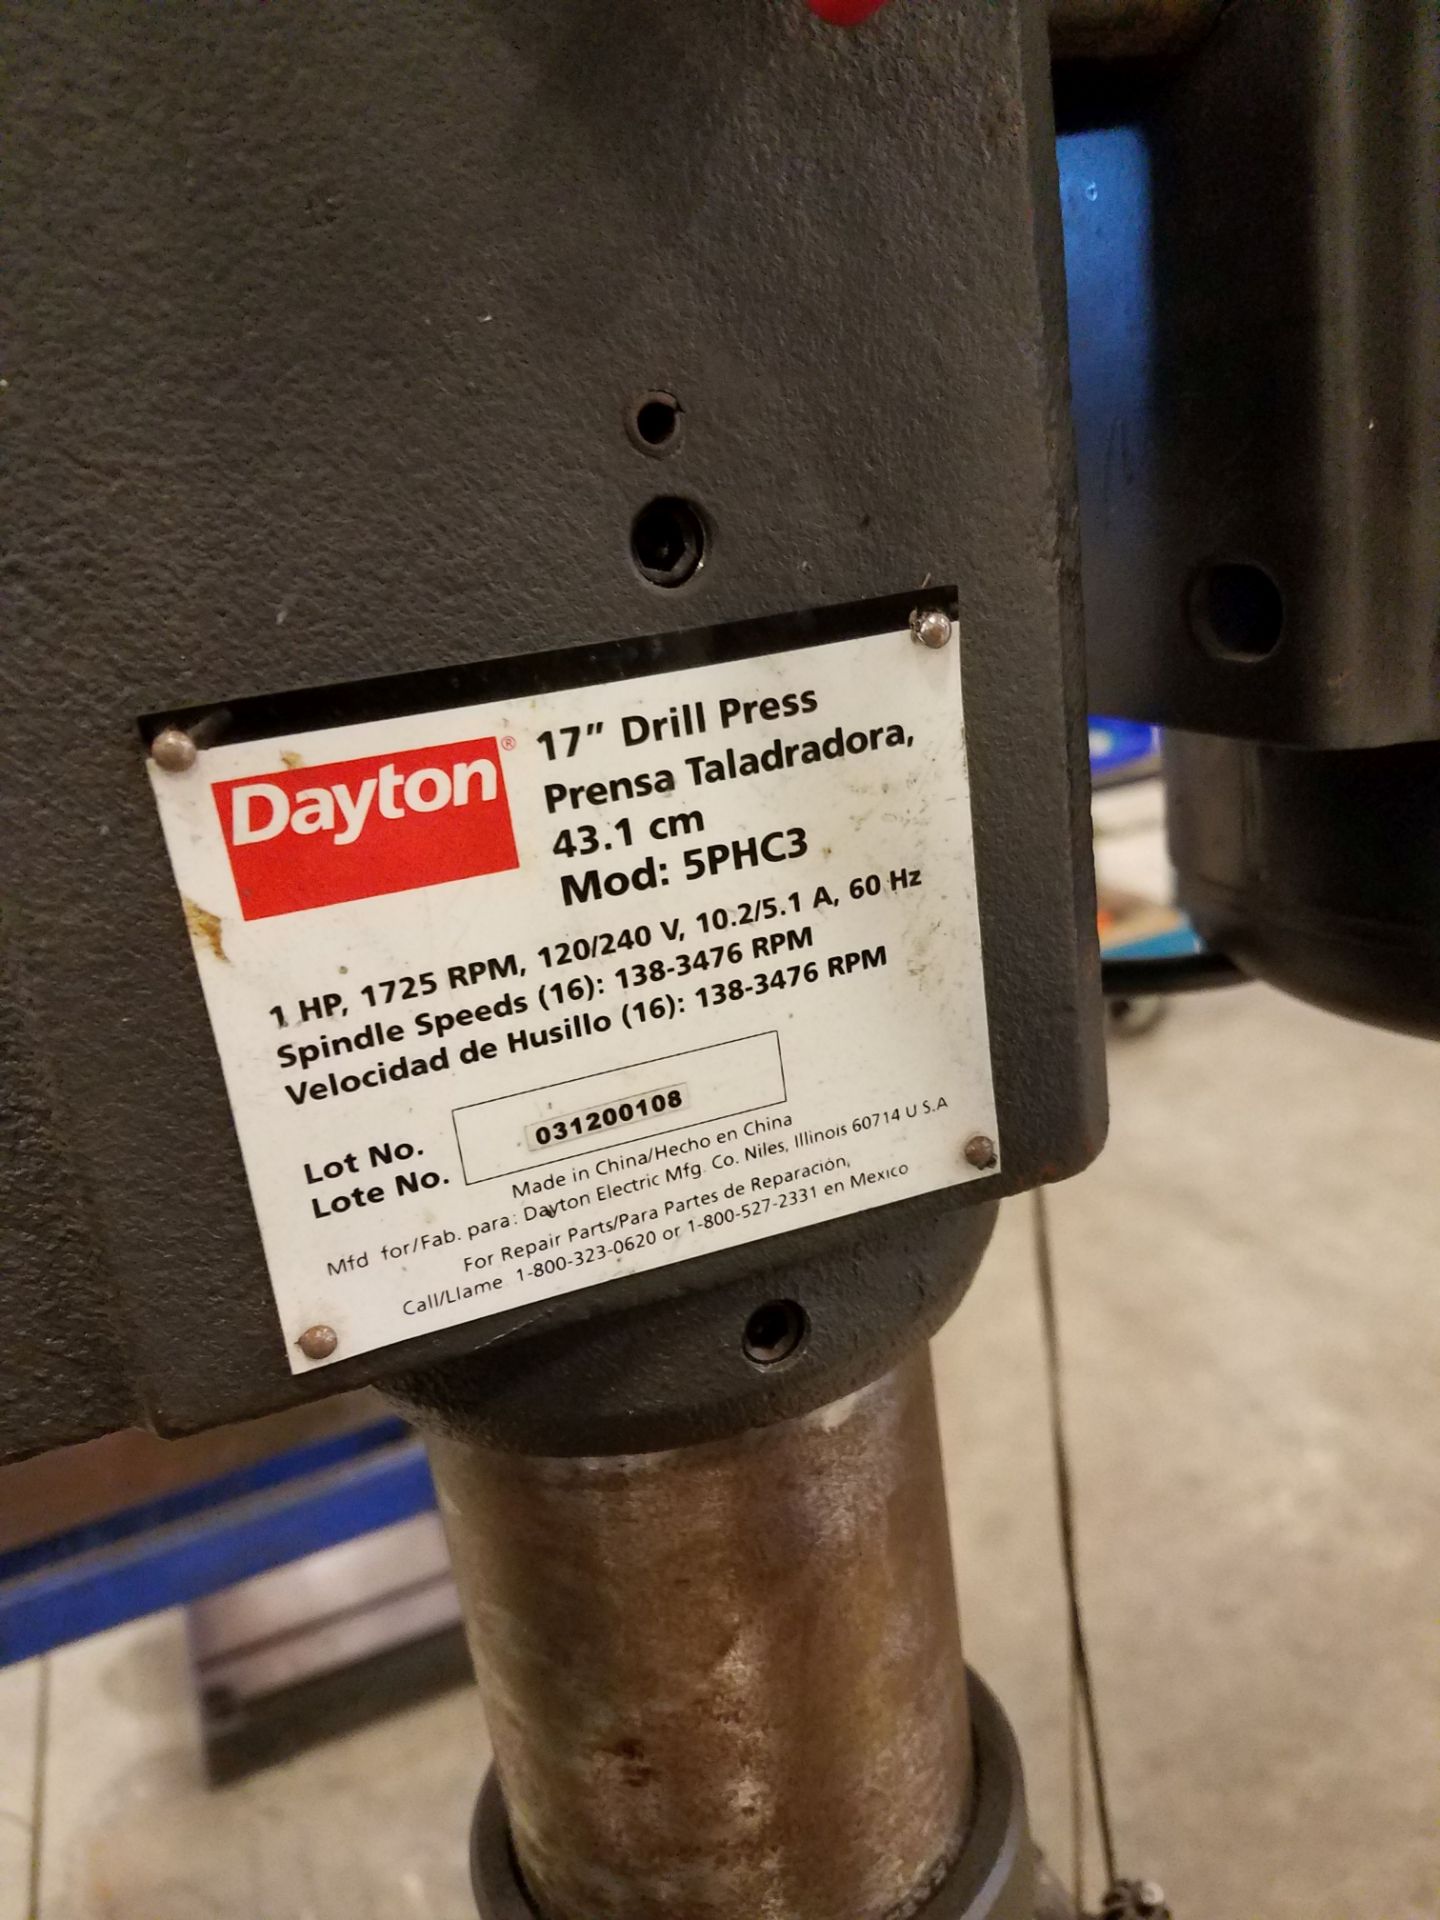 17" DAYTON MODEL 5PHC3 DRILL PRESS - Image 4 of 5